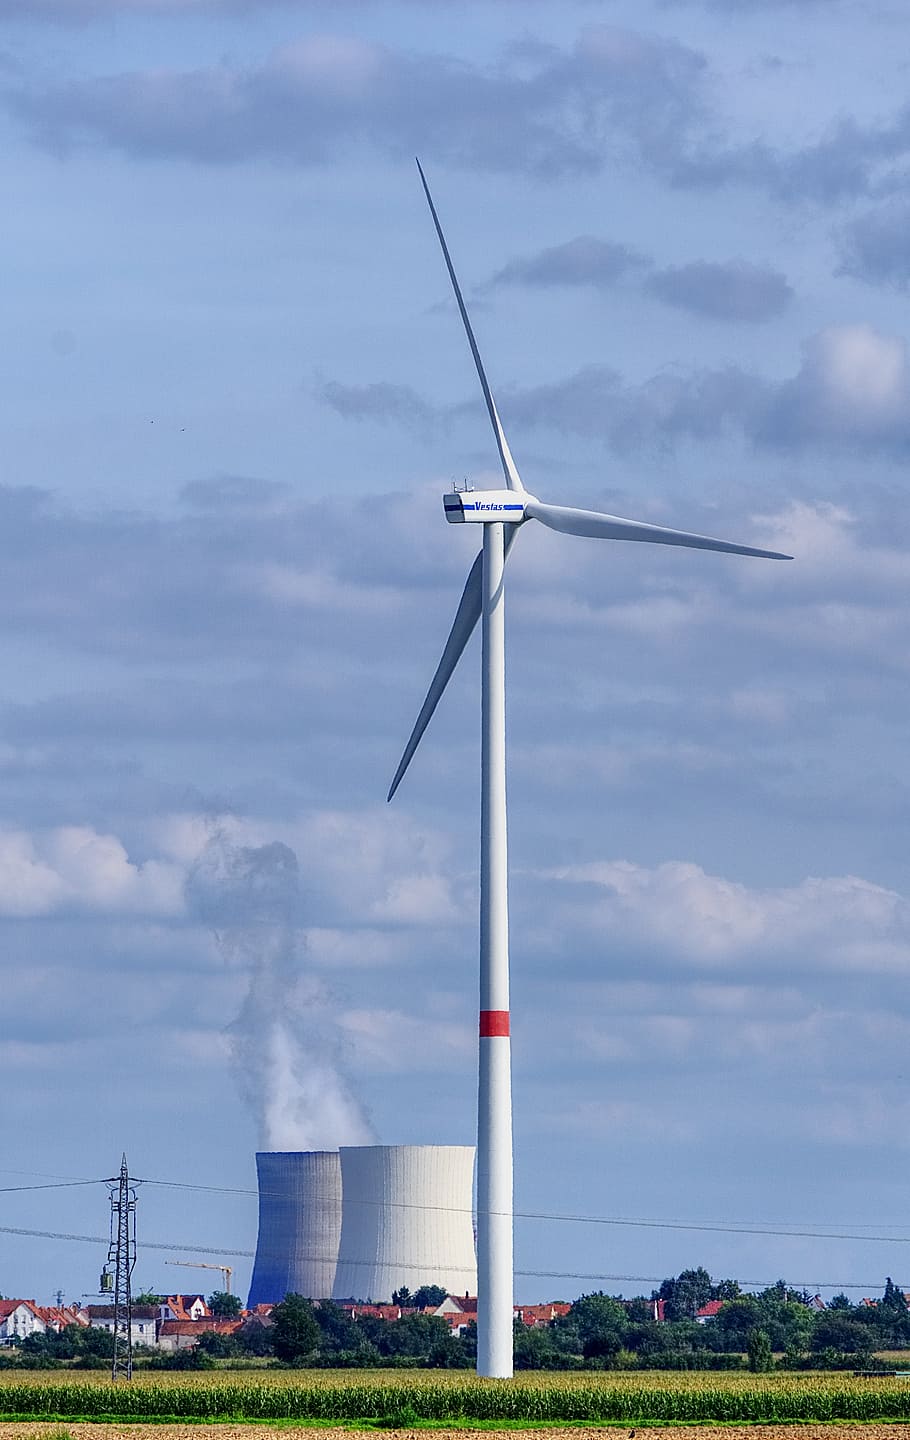 pinwheel, nuclear power plant, pollution, radiation, wind power